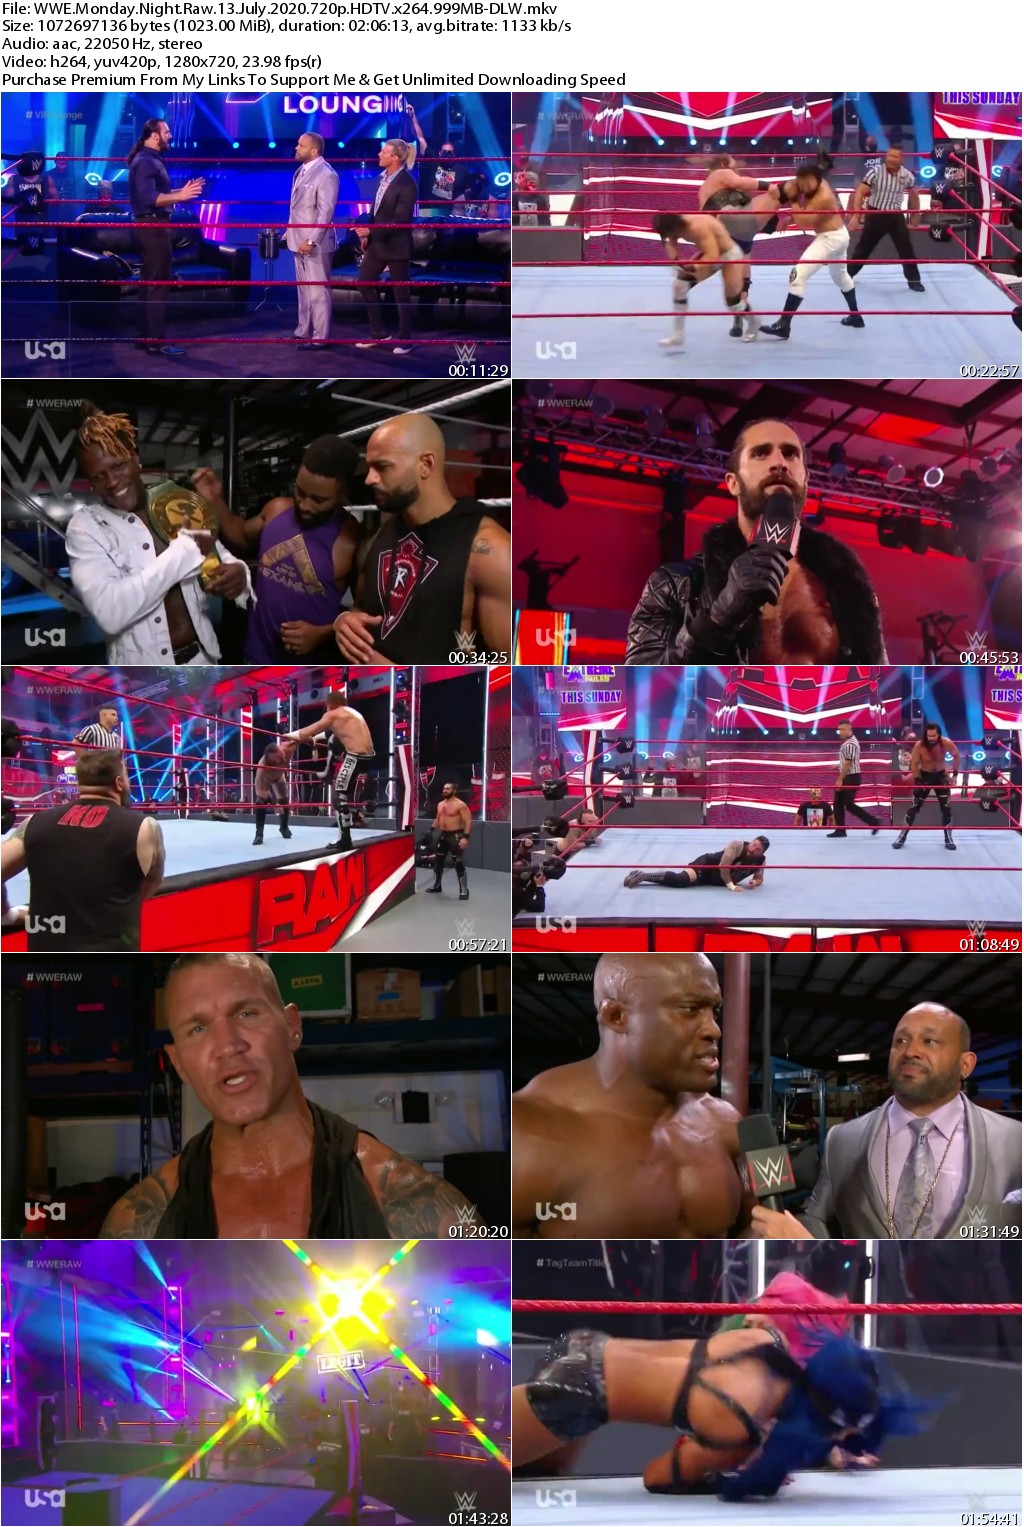 WWE Monday Night Raw 13 July 2020 720p HDTV x264 999MB-DLW